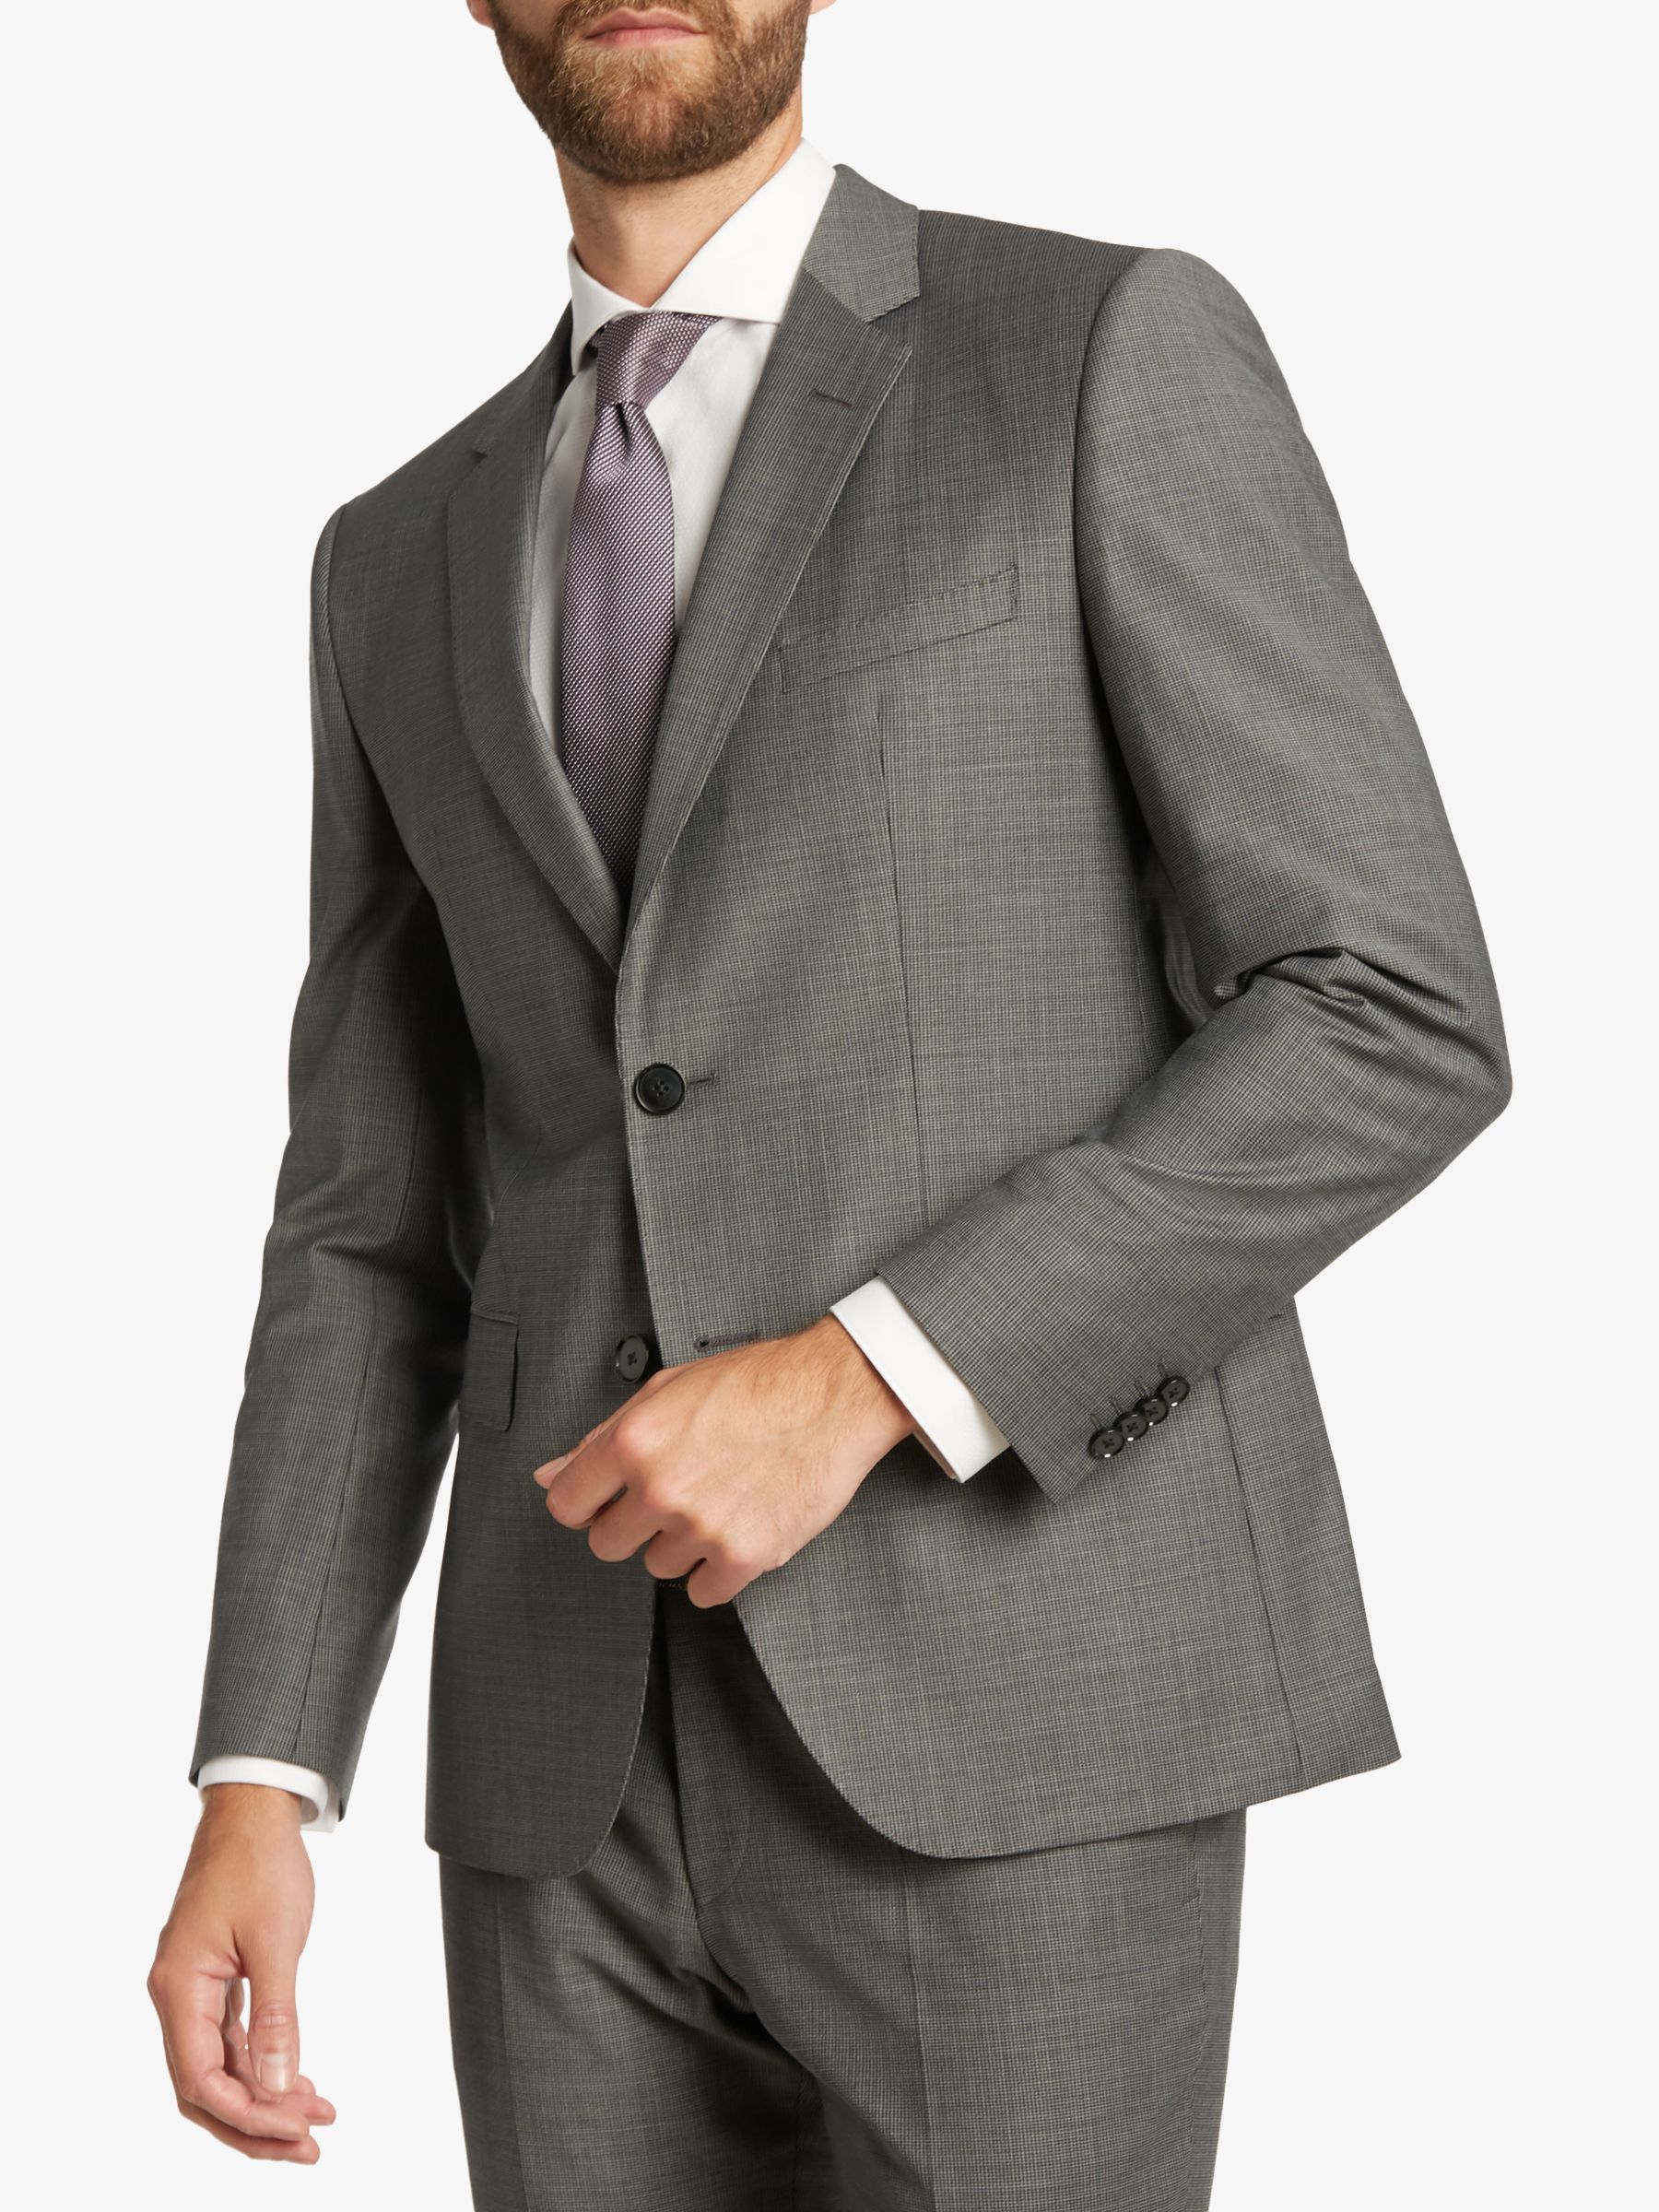 boss grey suit